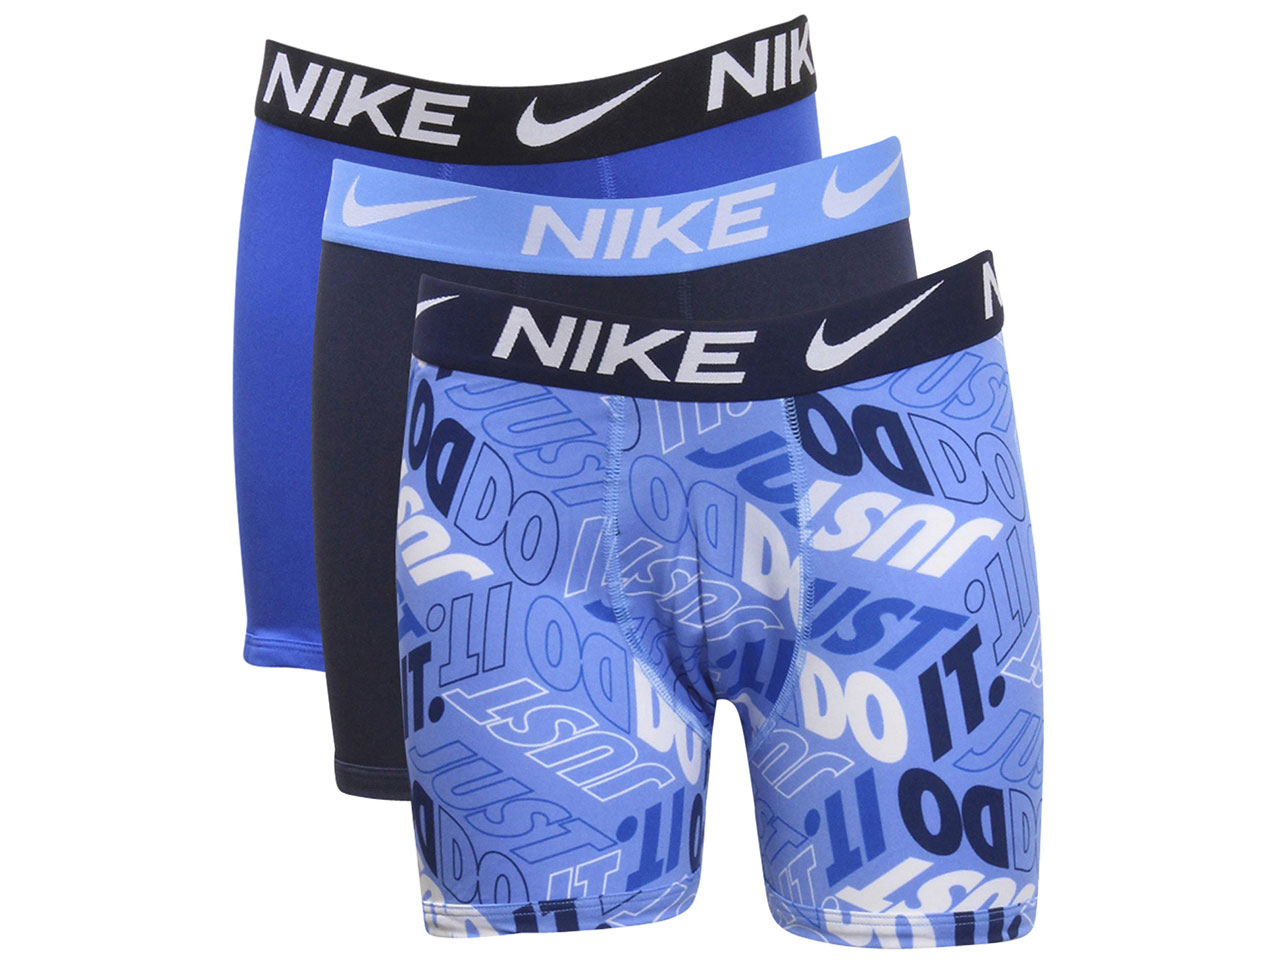 https://www.joylot.com/gallery-option/554277924/1/nike-youth-boys-3-pairs-boxer-briefs-underwear-micro-dri-fit-white-university-blue-w1w-1.jpg